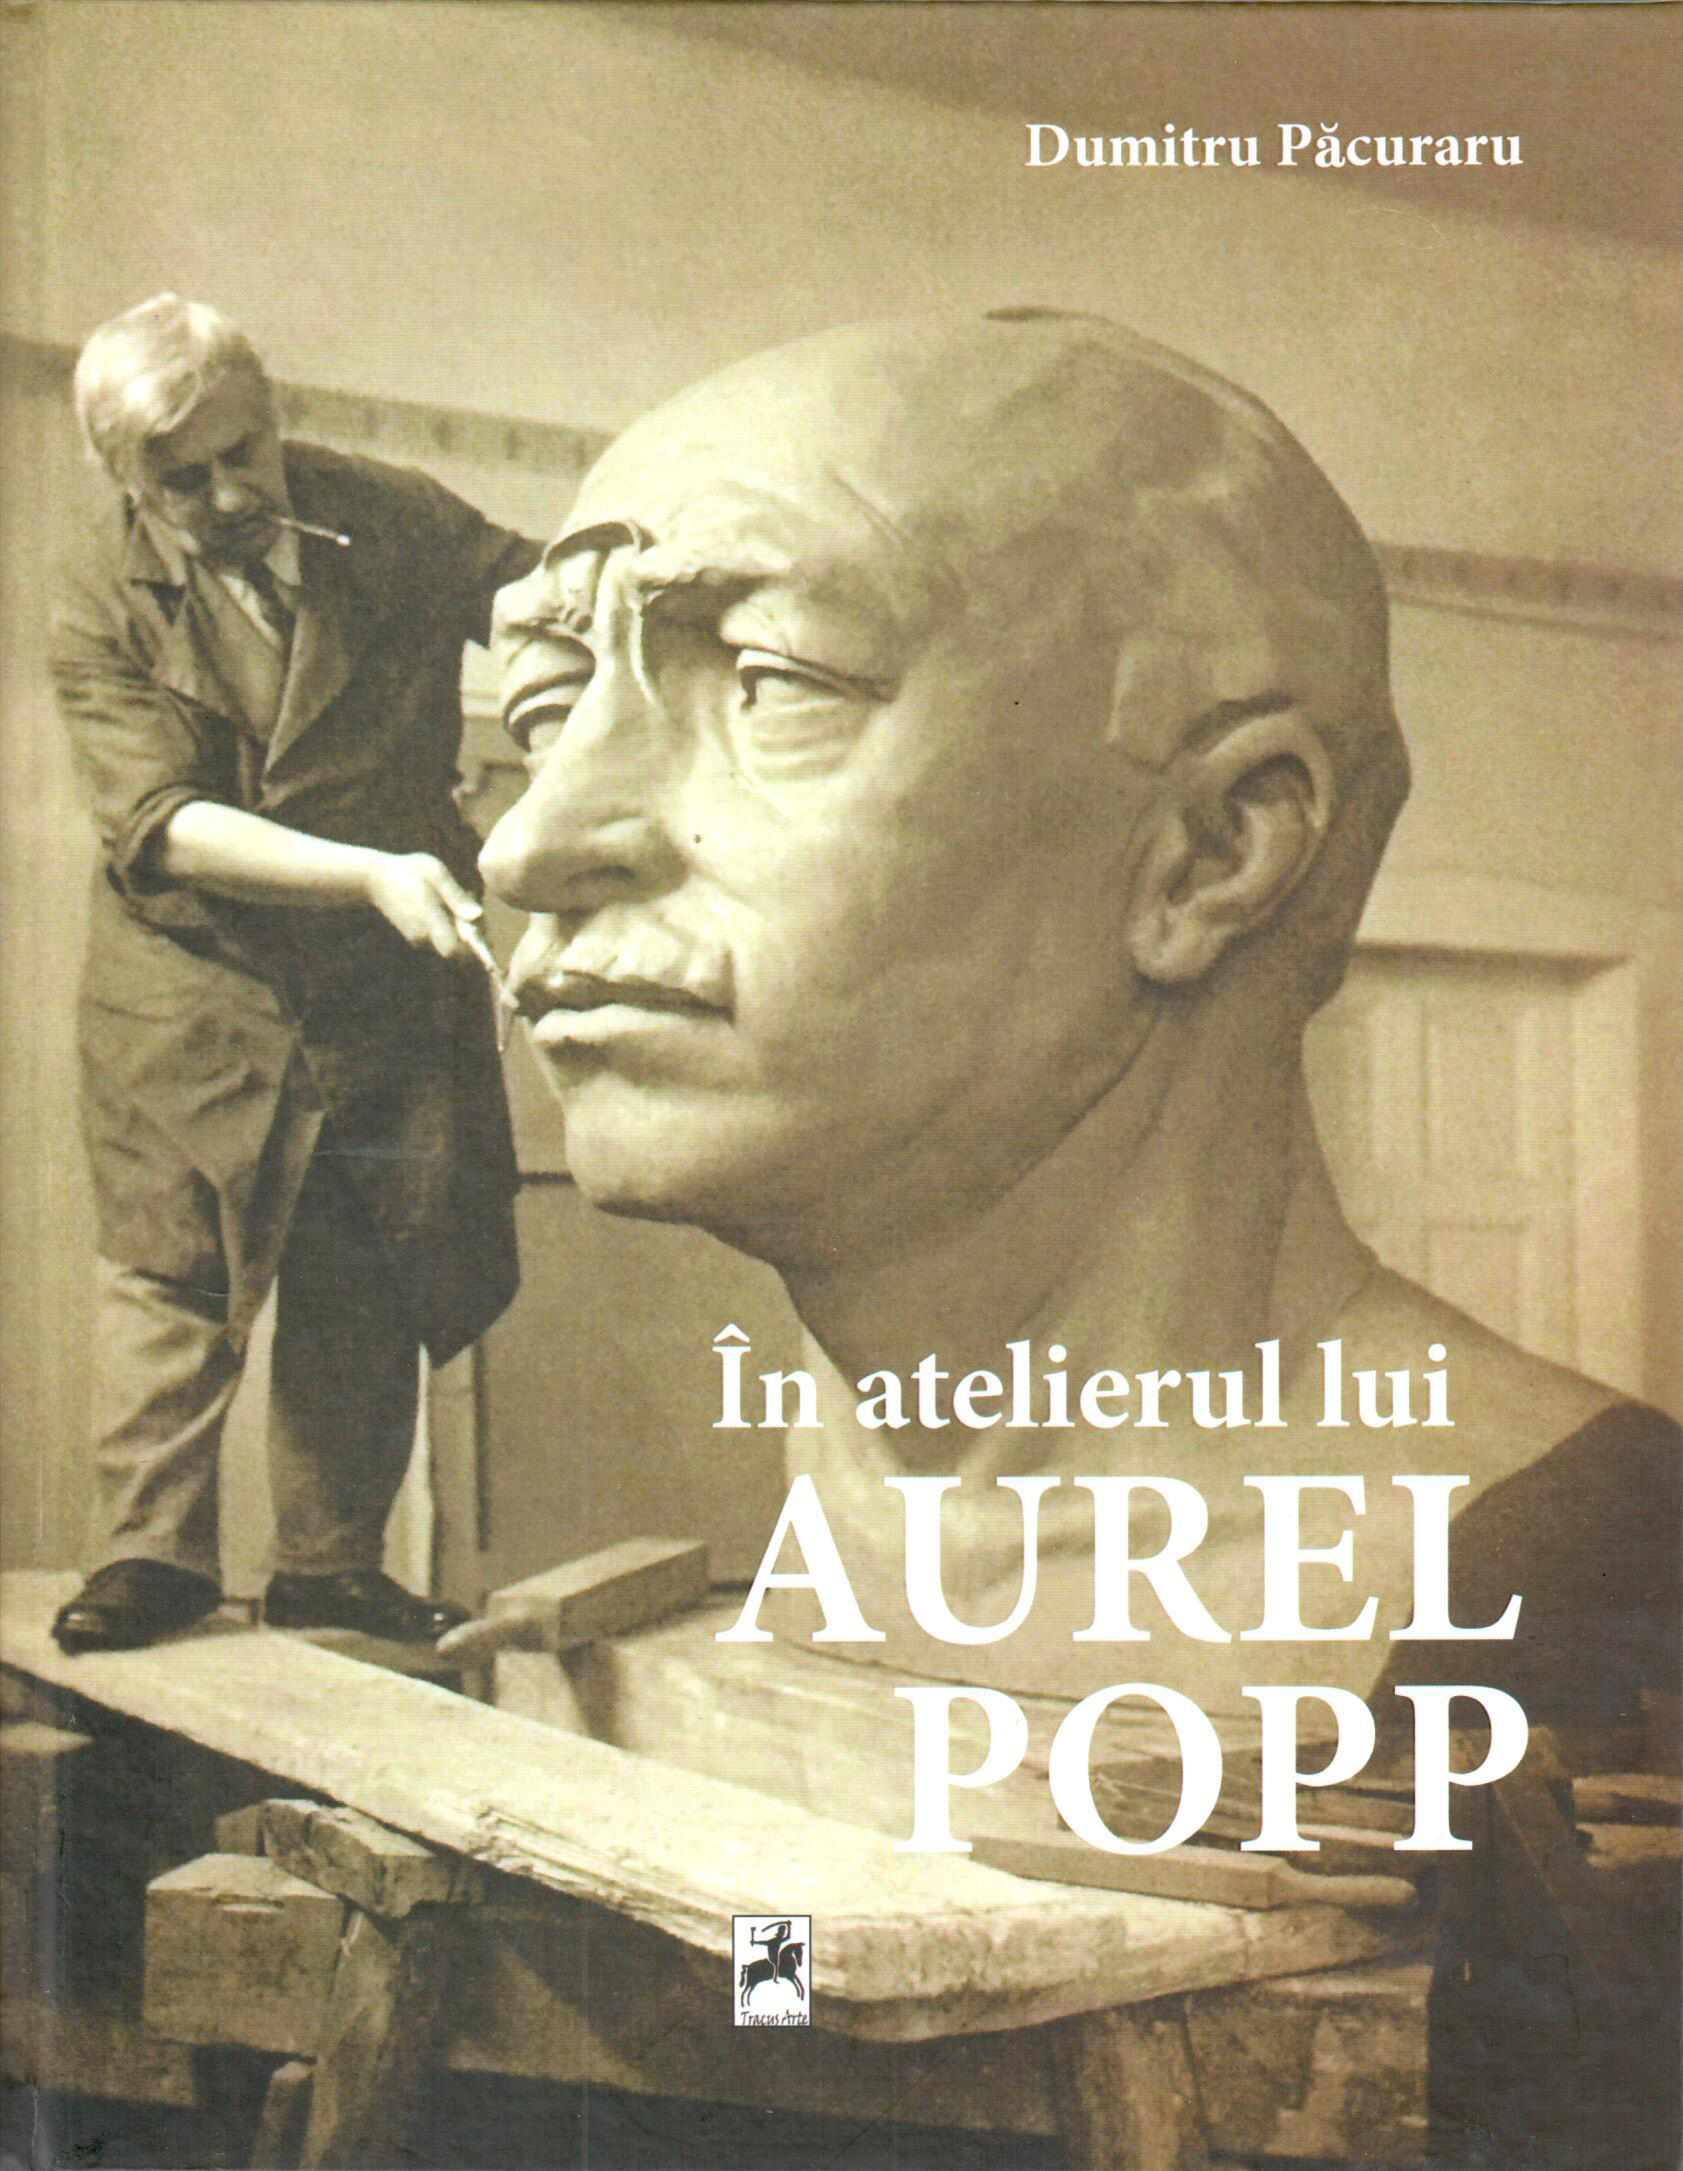 In atelierul lui Aurel Popp | Dumitru Pacuraru carturesti.ro poza 2022